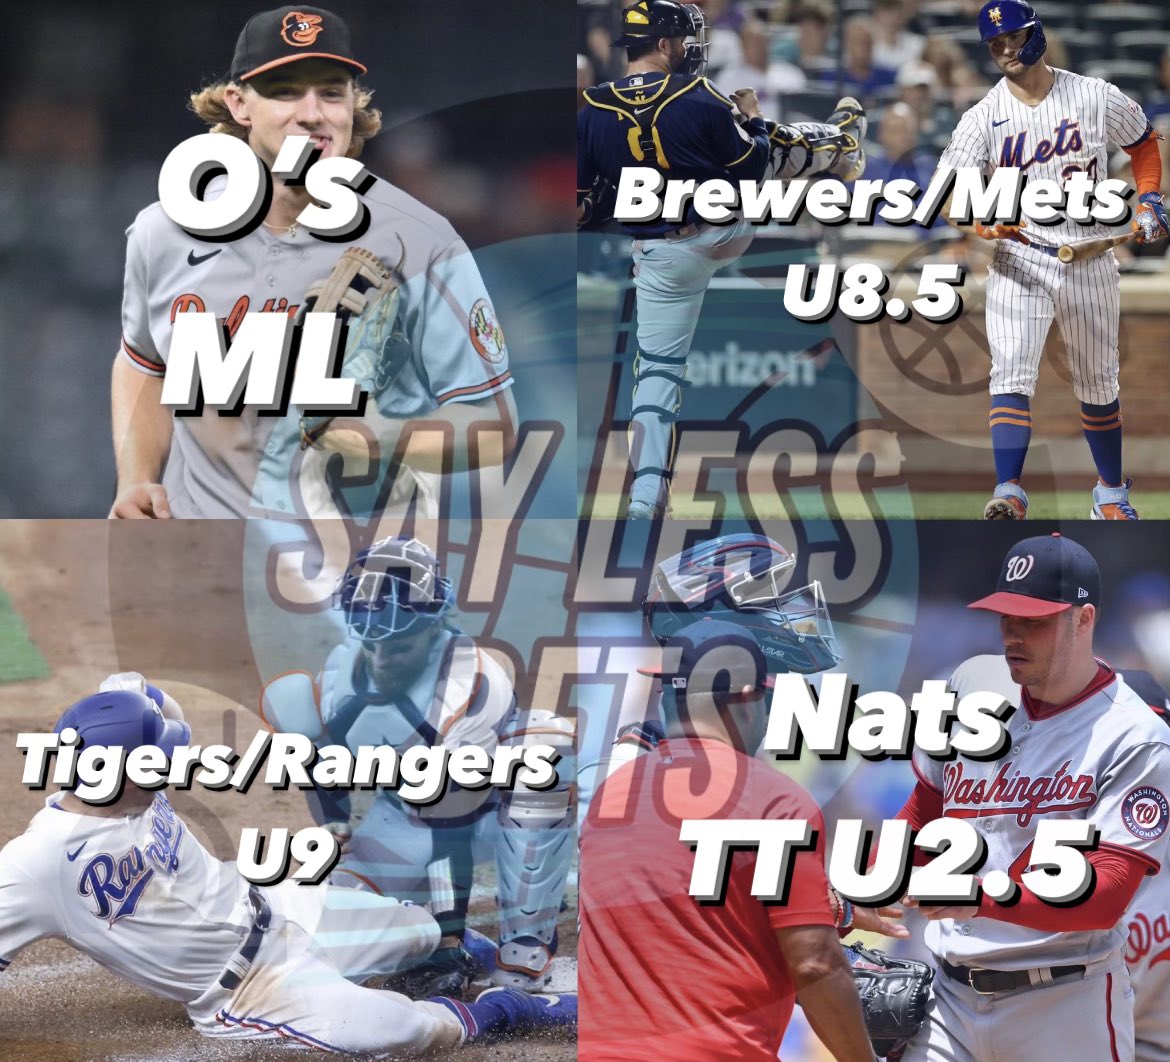 SAYLESS MONDAY🤫

O’s ML -130(1u)👀💰
Brewers/Mets U8.5 -110(1u)👀💰
Tigers/Rangers U9 -110(1u)👀💰
Nats TT U2.5 +100(1u)👀💰

4 plays for Monday🔥 Long week ahead let’s get these tonight and build💯#GamblingTwitter